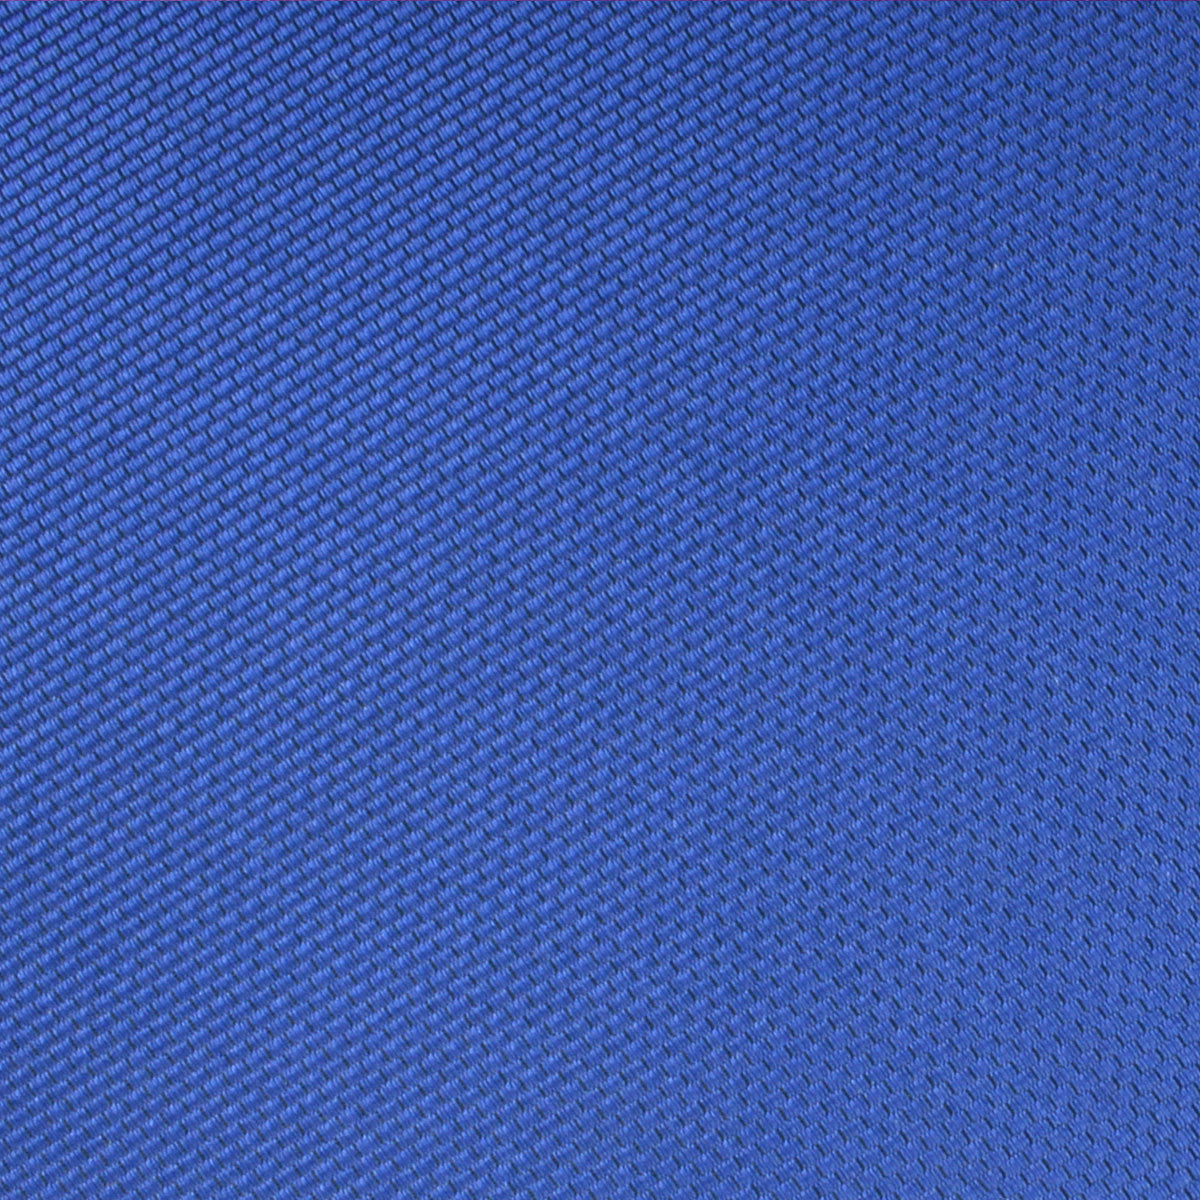 Horizon Blue Weave Fabric Swatch